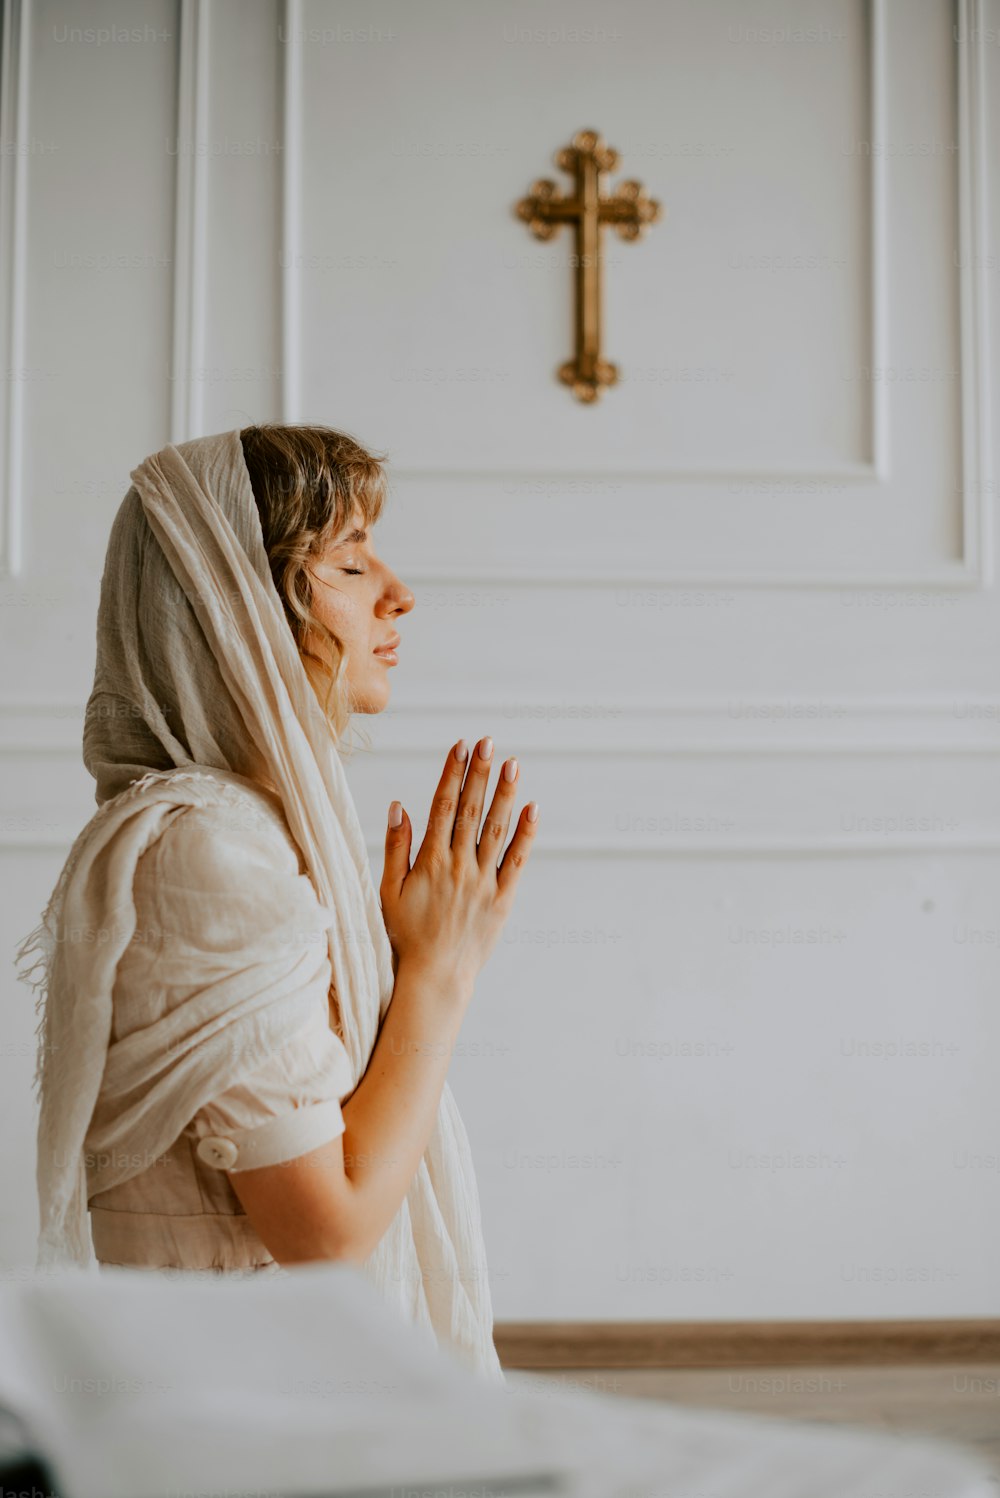 Una donna in una veste bianca sta pregando